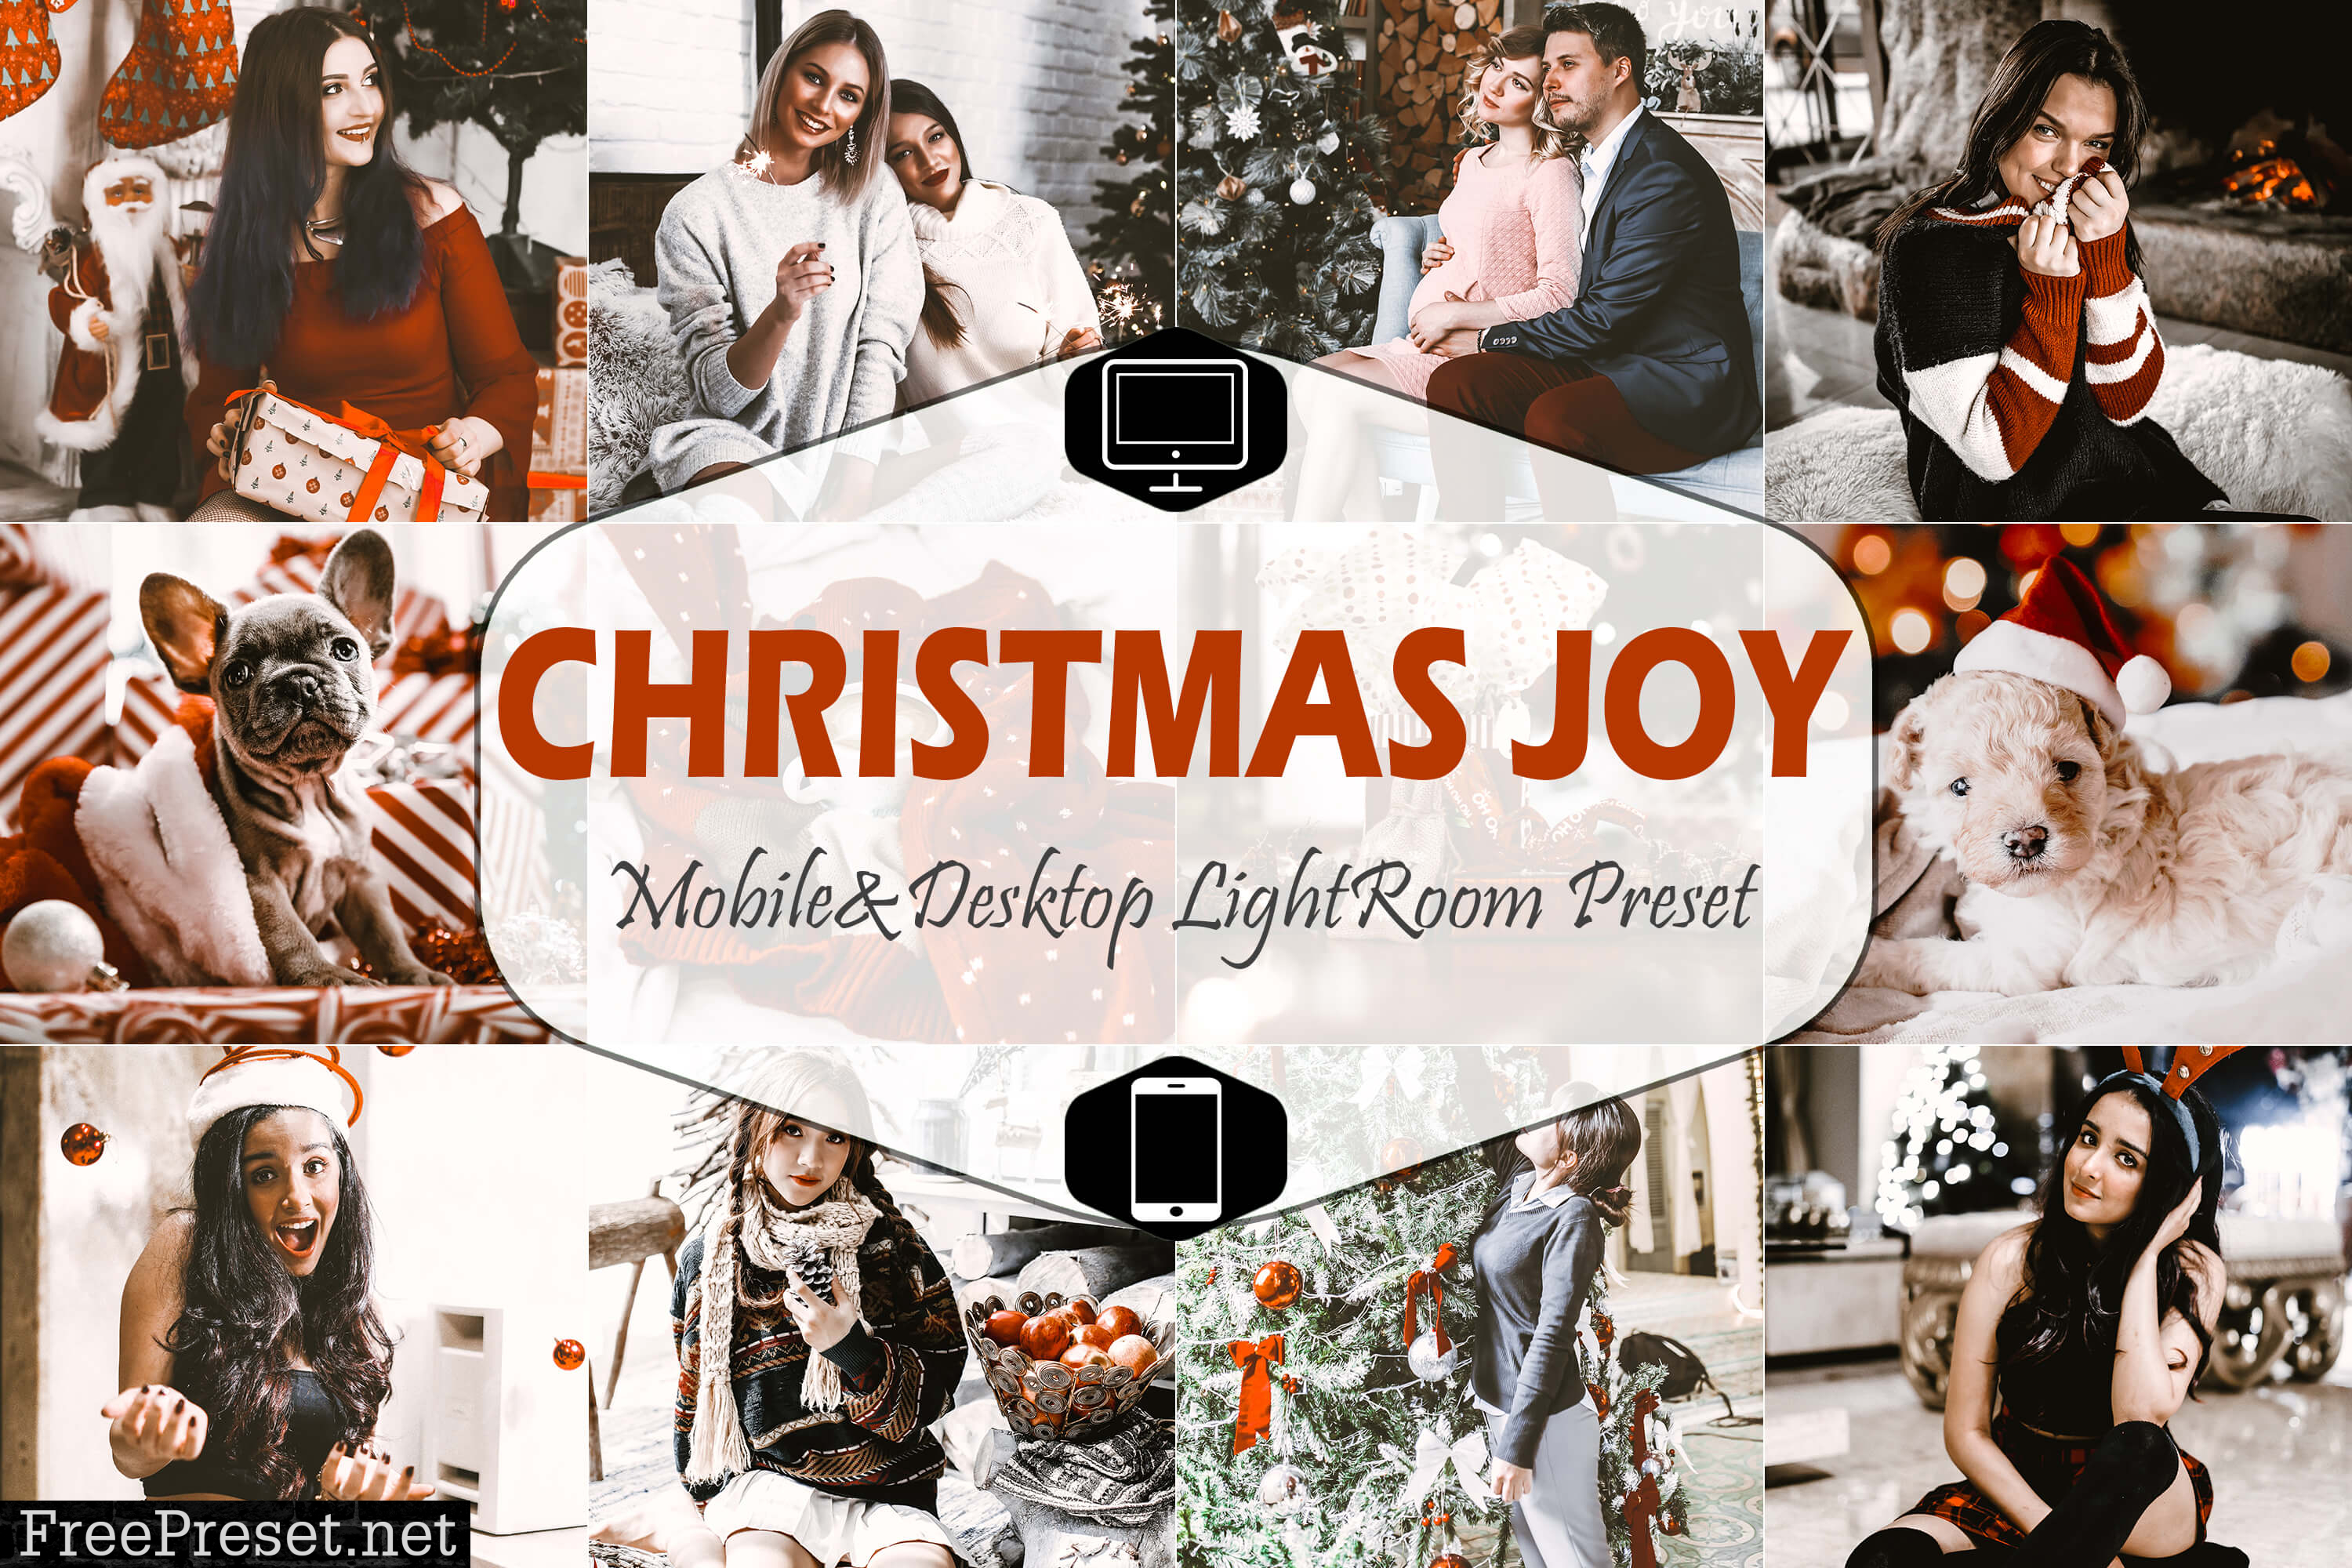 Shine Christmas Presets 12 CHRISTMAS Presets for LightroomHoliday Mobile PresetsWinter Instagram FilterMobile and Desktop